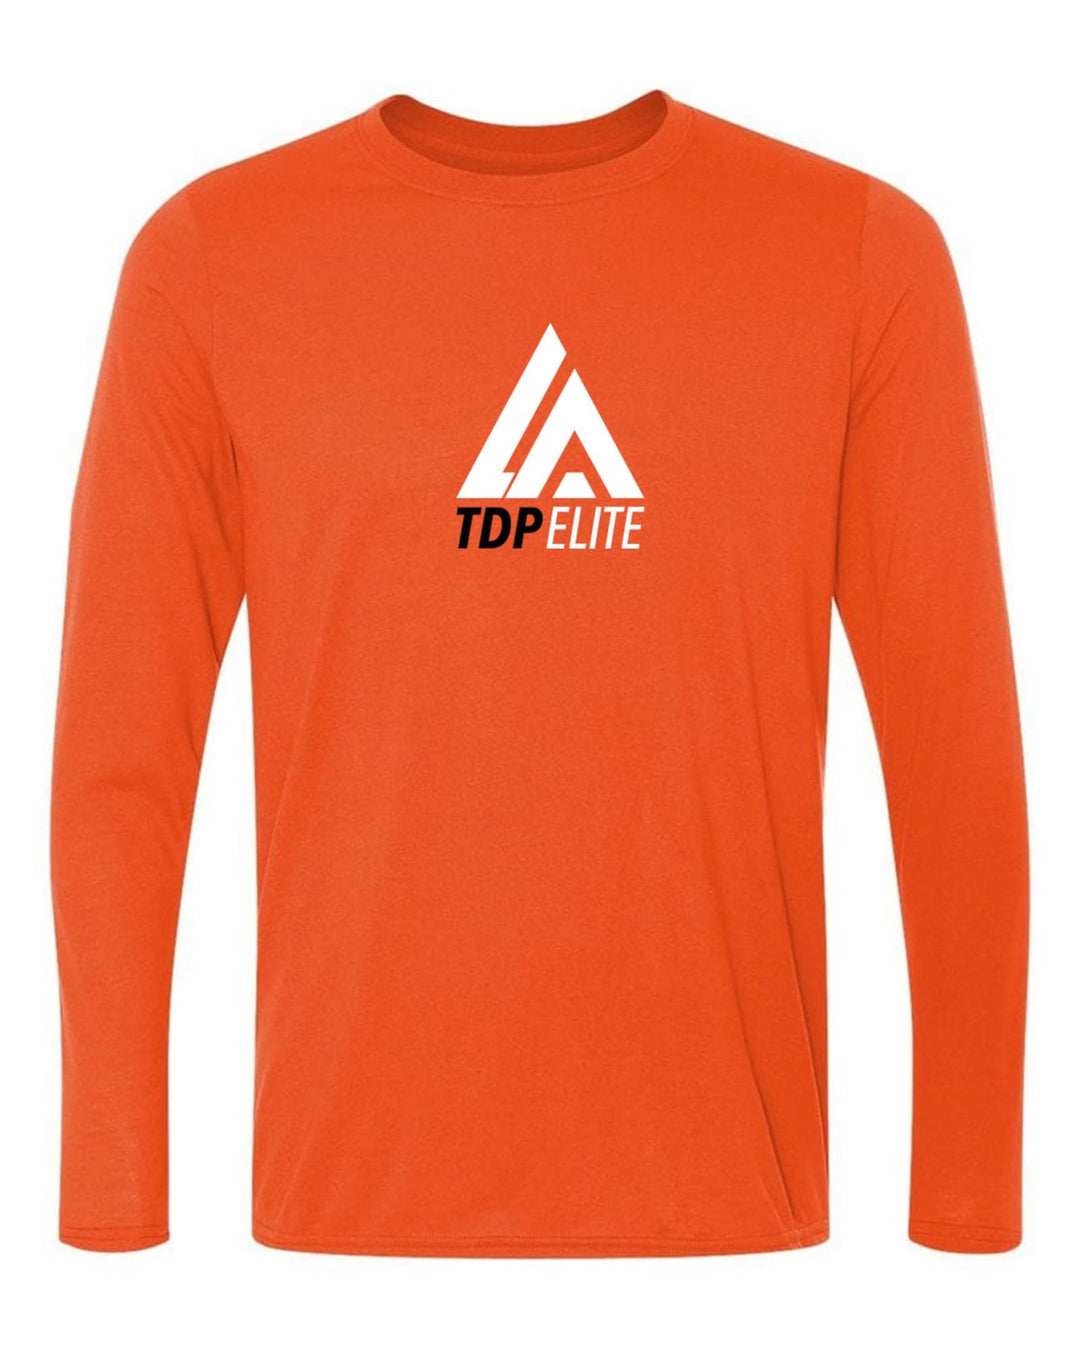 LATDP Elite Long-Sleeve T-Shirt LATDP Spiritwear ORANGE MENS EXTRA LARGE - Third Coast Soccer